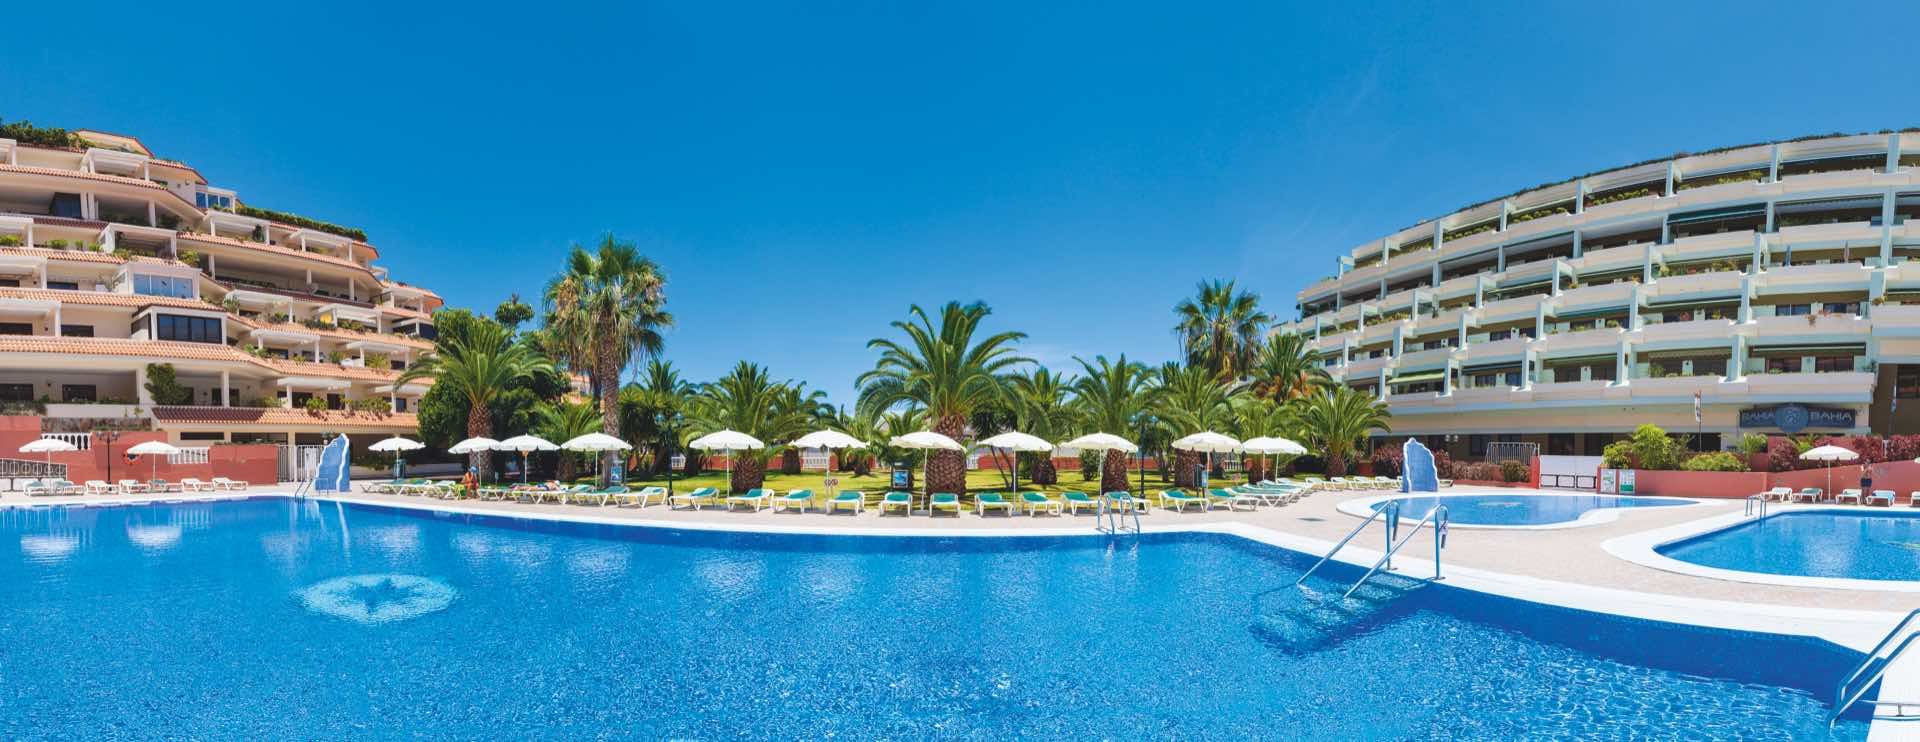 Obrázek hotelu Bahia Playa